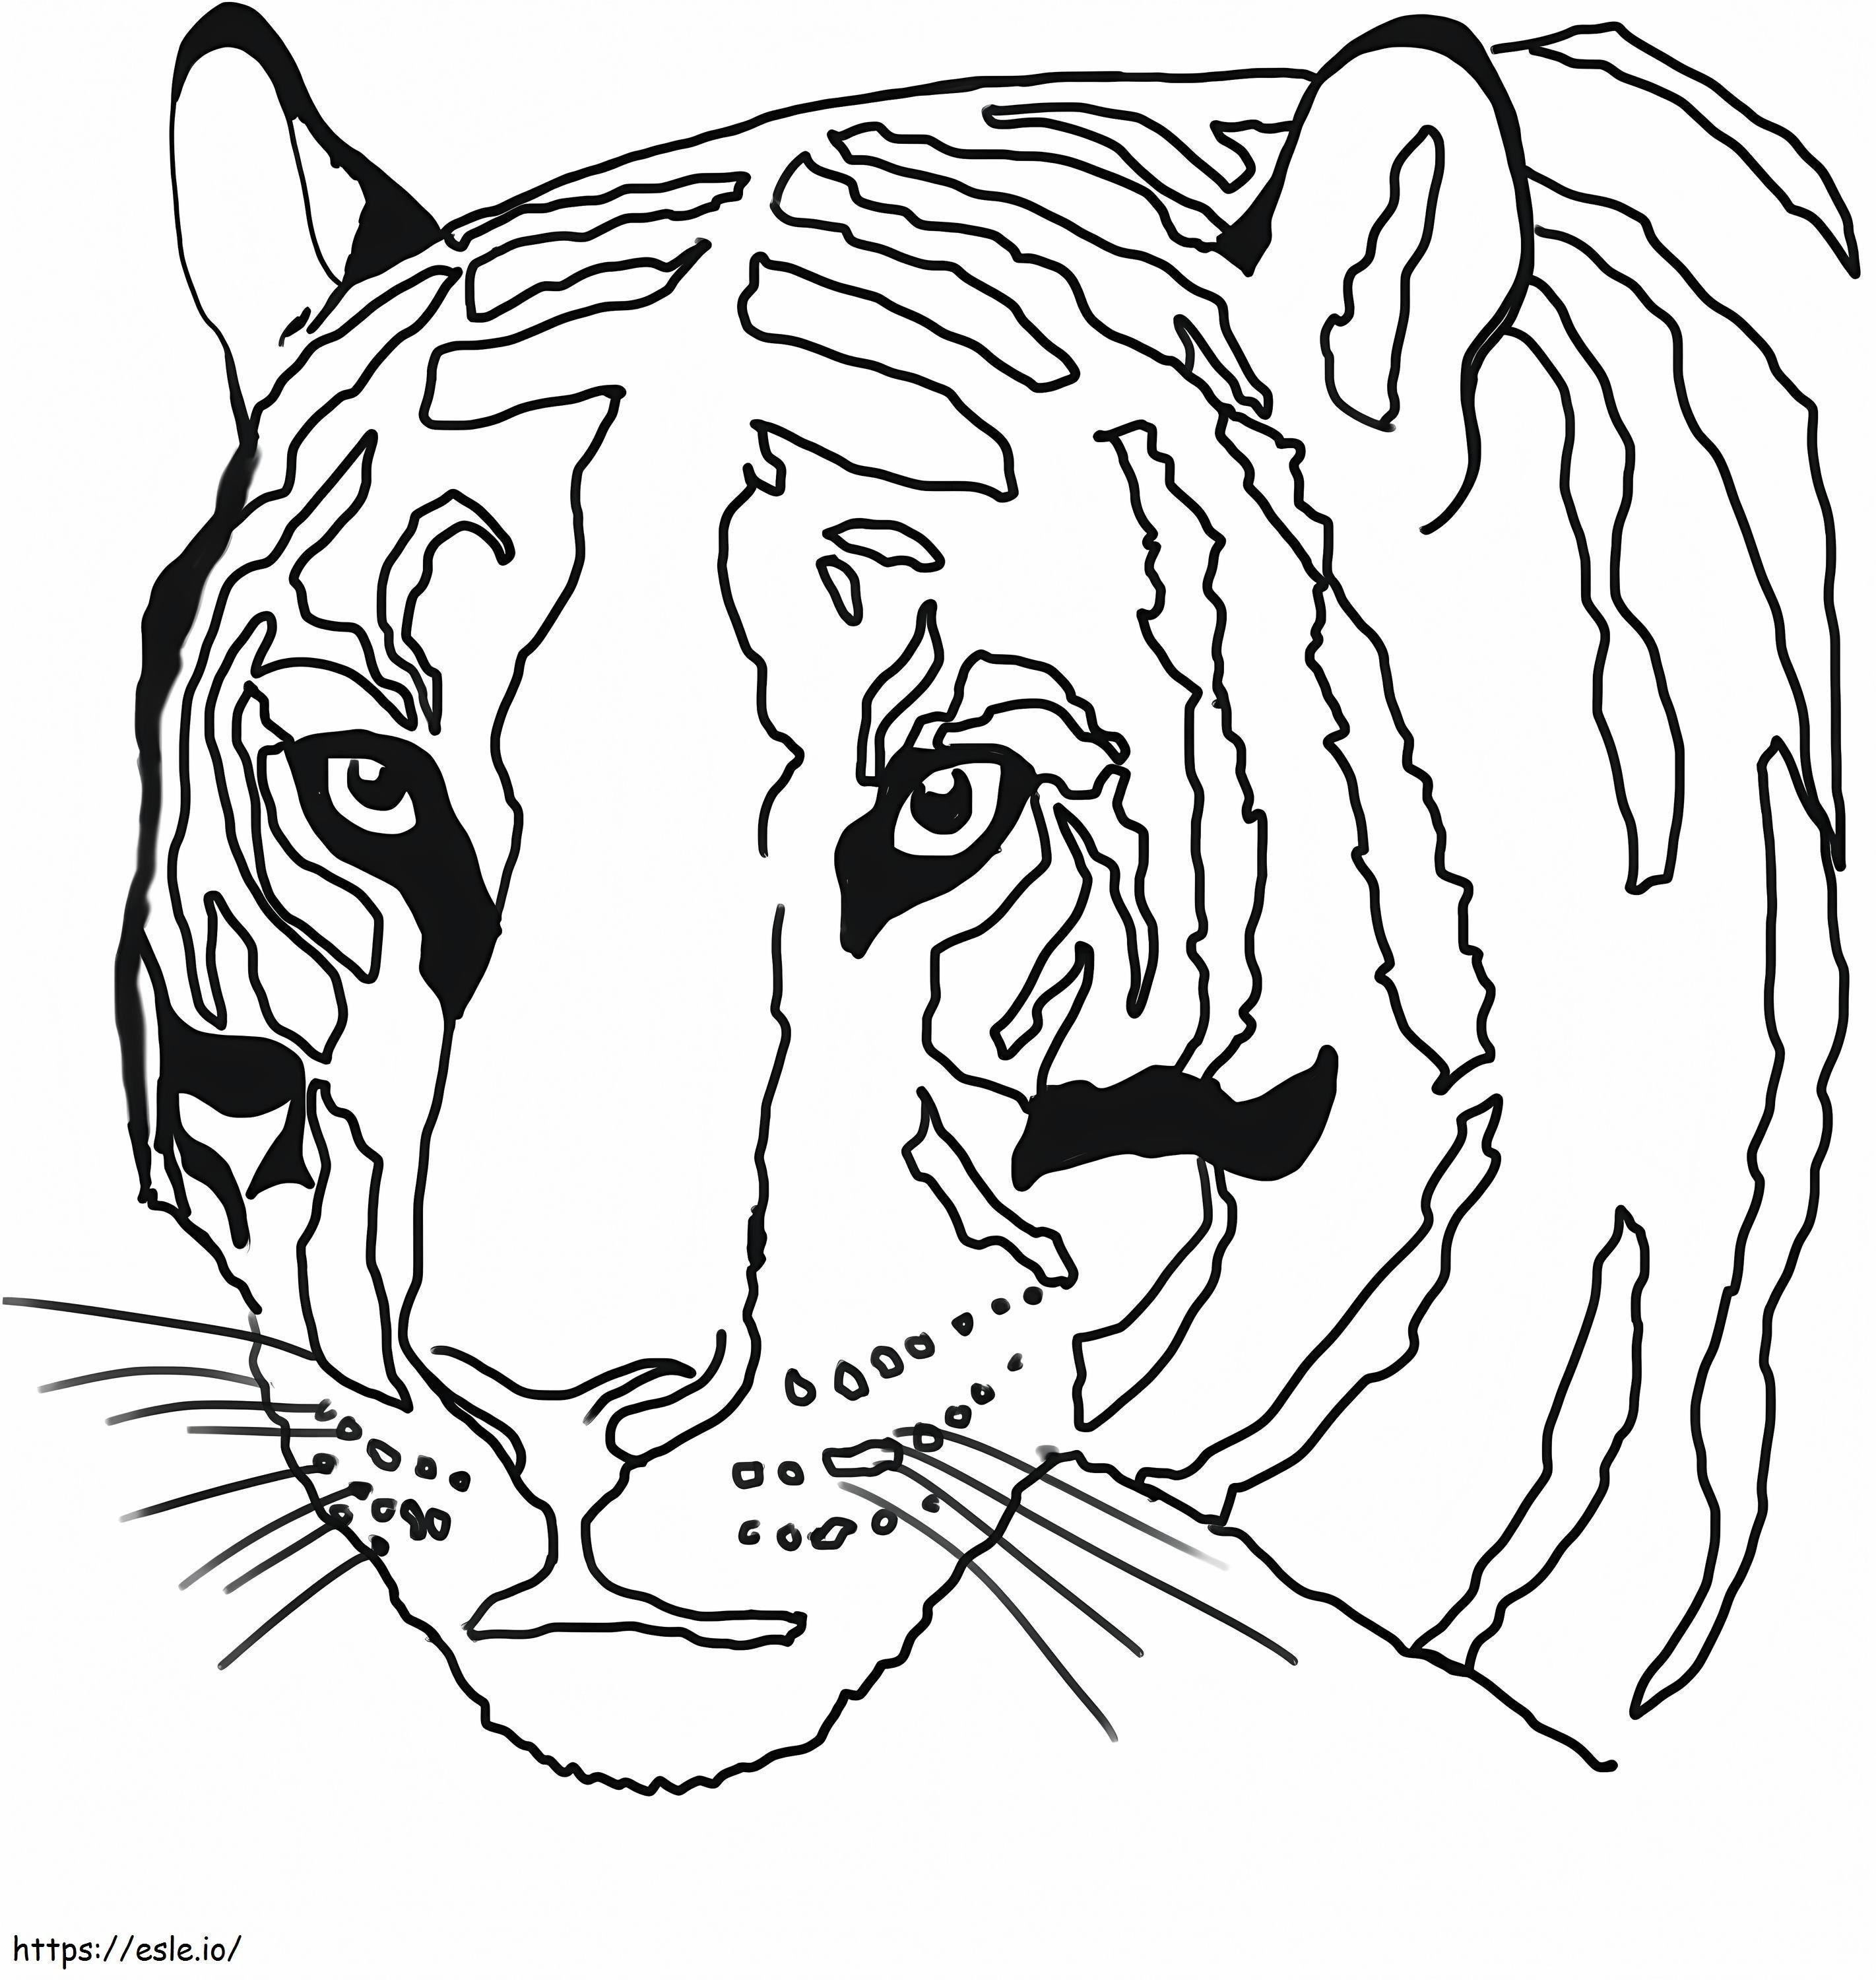 Tigerkopf ausmalbilder